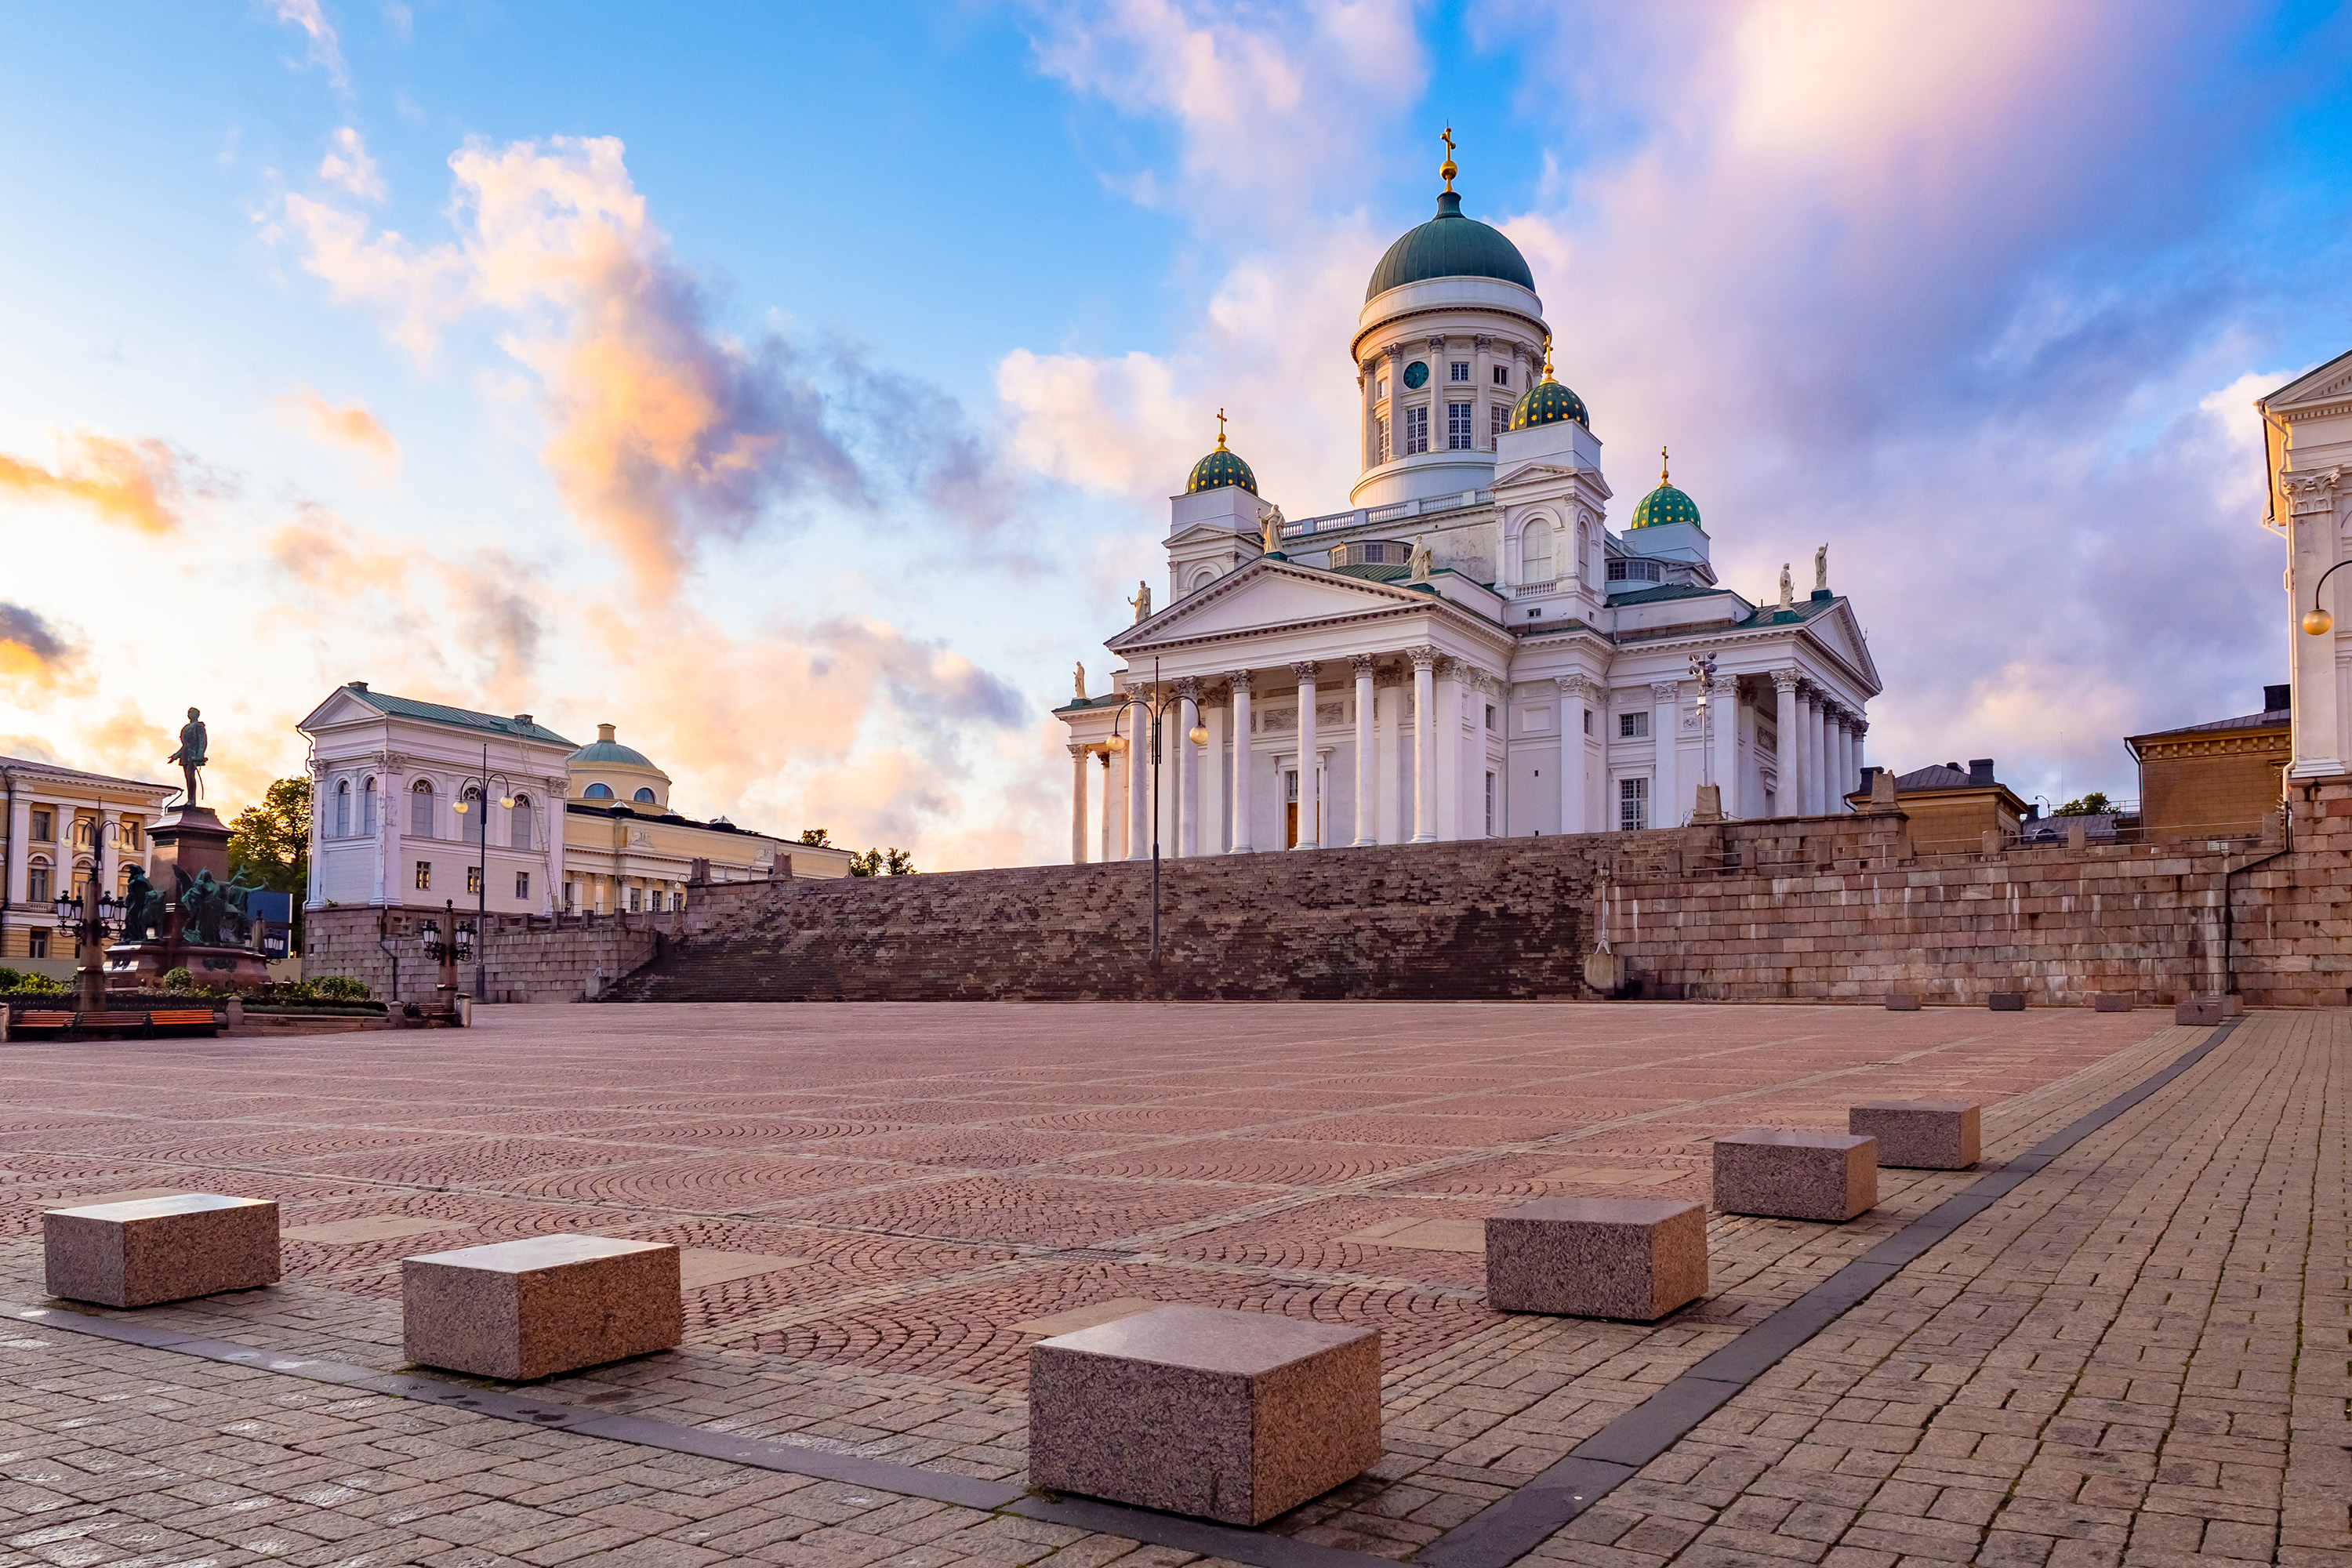 historic building in Helsinki, Finland